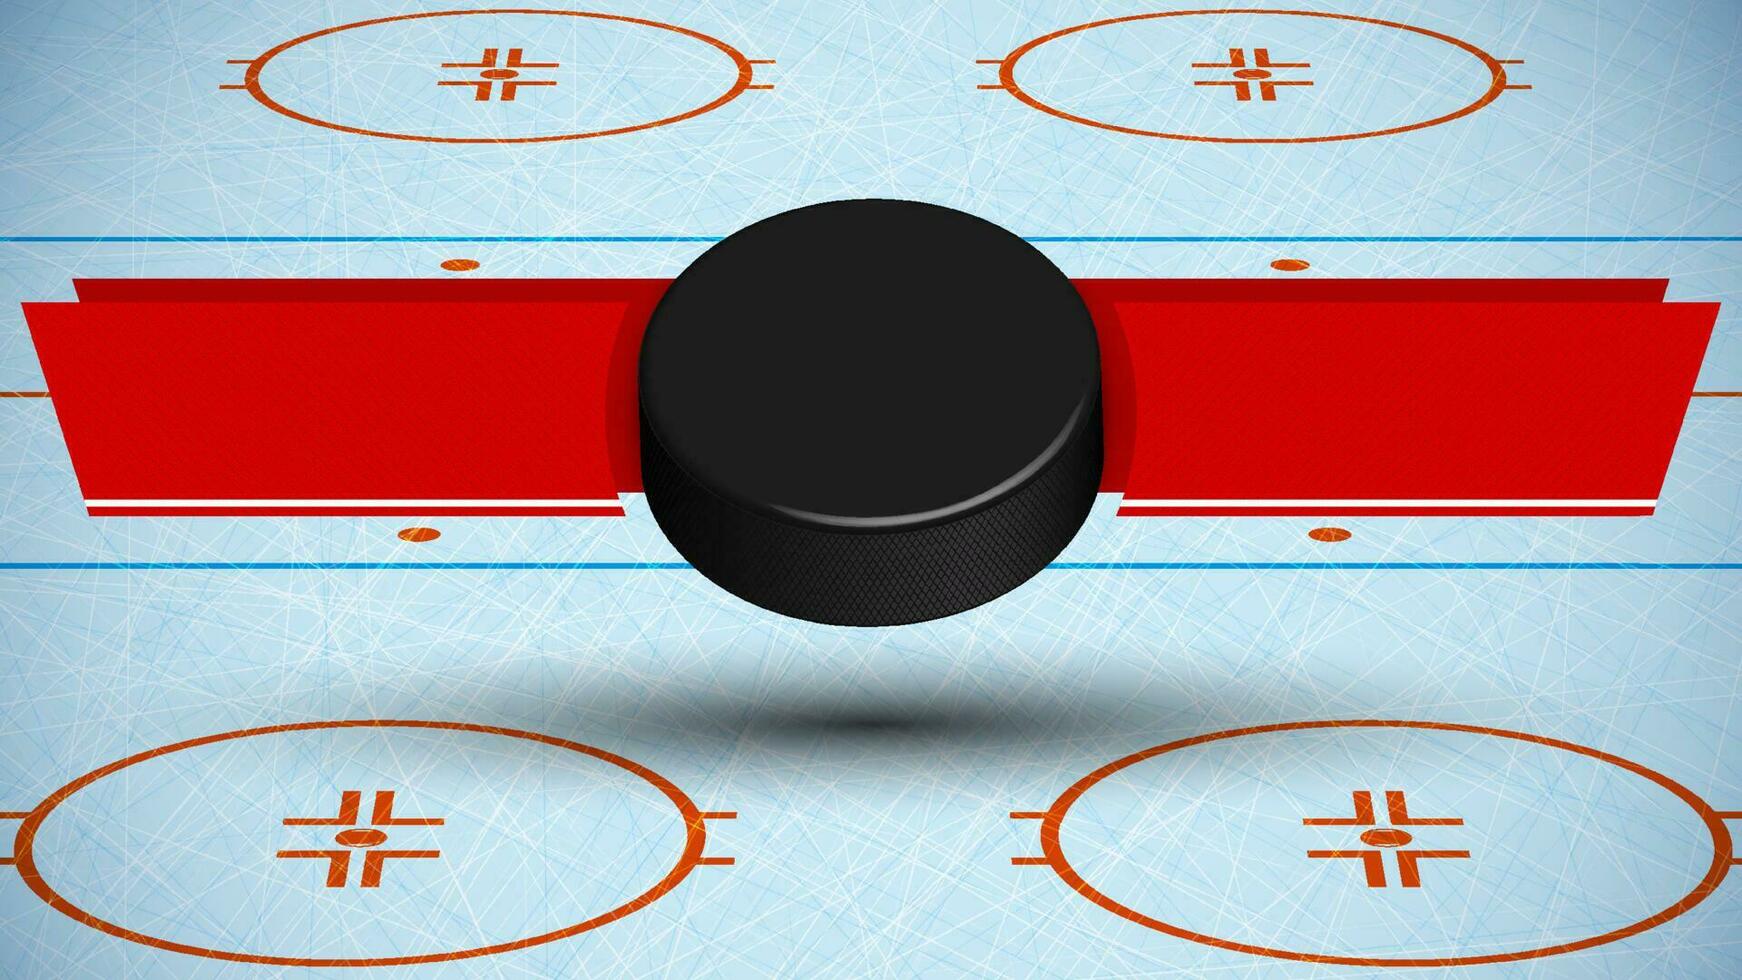 modelo para torneo con hielo hockey disco en antecedentes de deporte hielo pista con cintas para anuncio de nombres de equipos vector